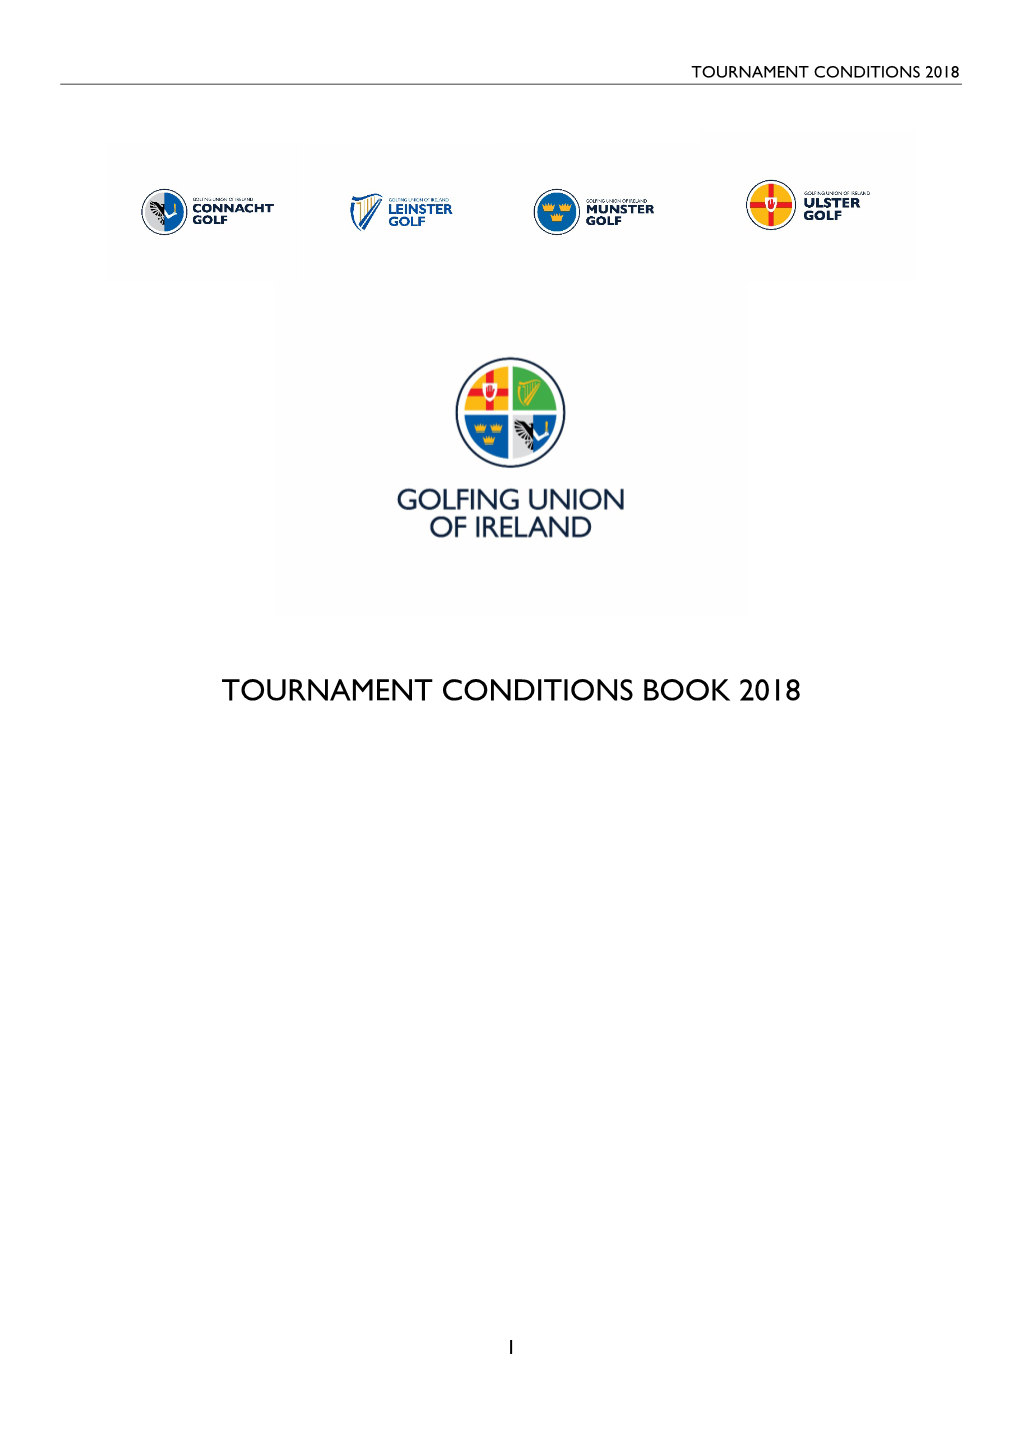 Tournament Conditions Book 2018